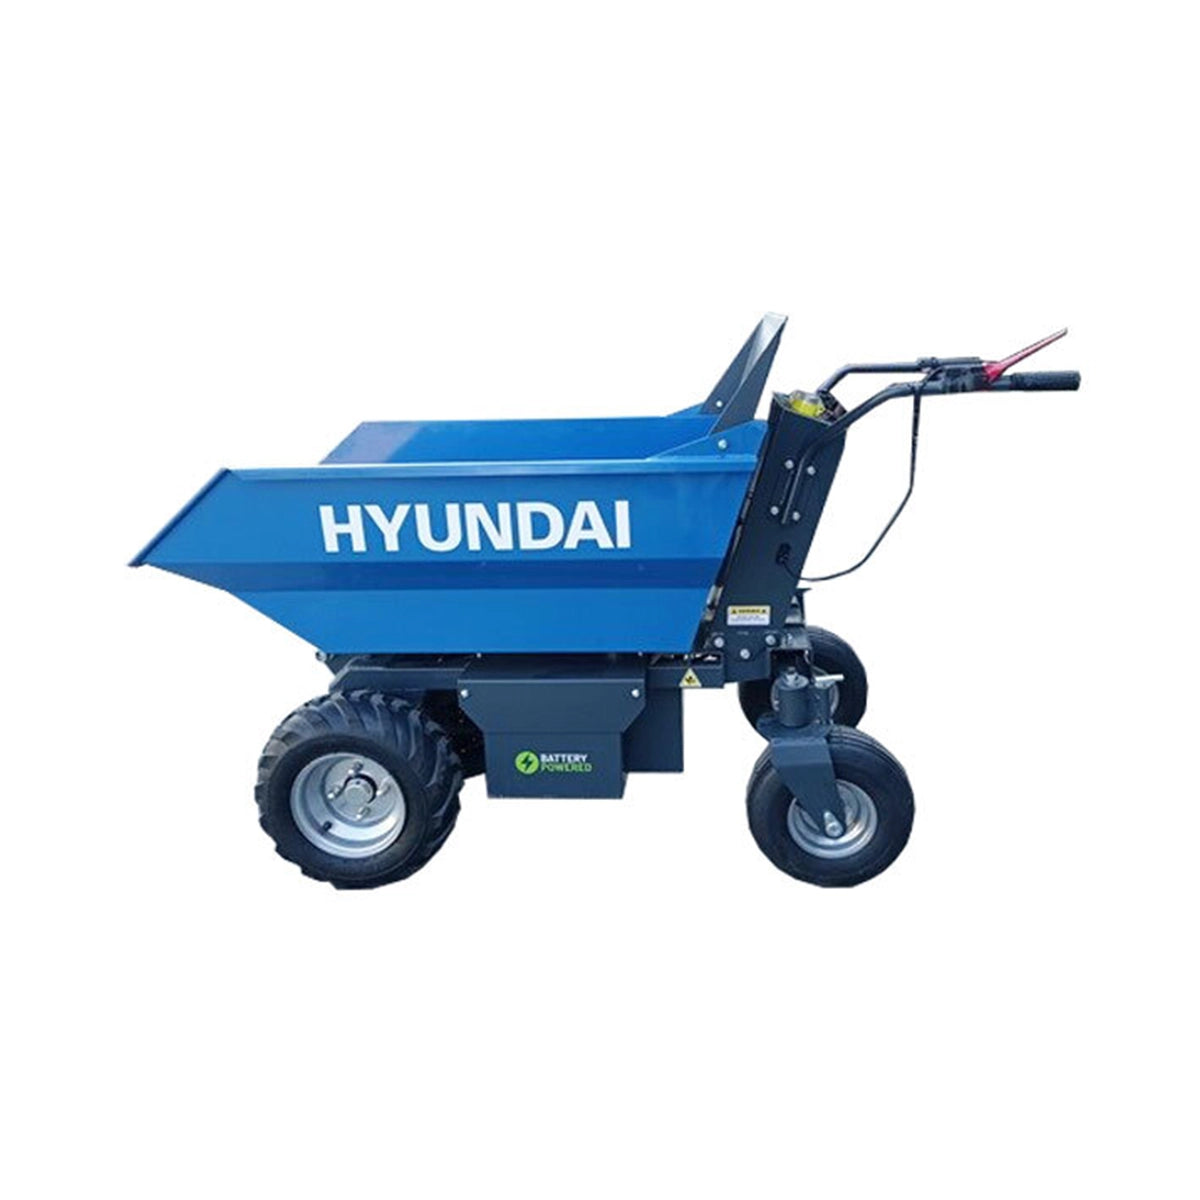 Hyundai HYMD500B 500kg Payload Battery Powered Mini Dumper